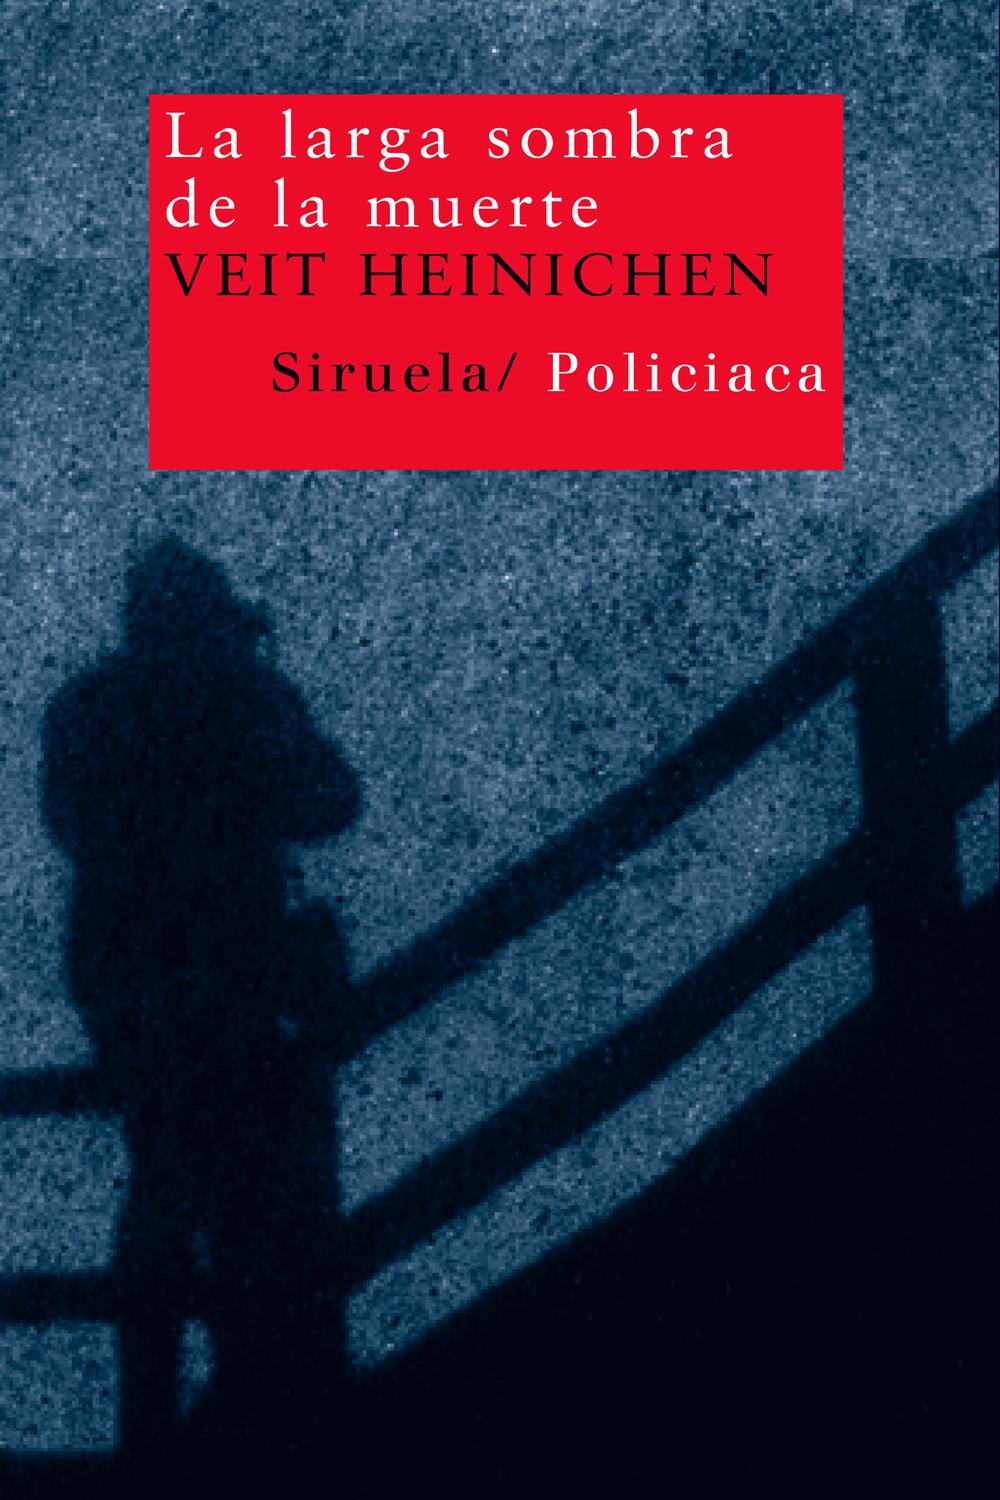 La larga sombra de la muerte - Veit Heinichen, Christian Martí-Menzel